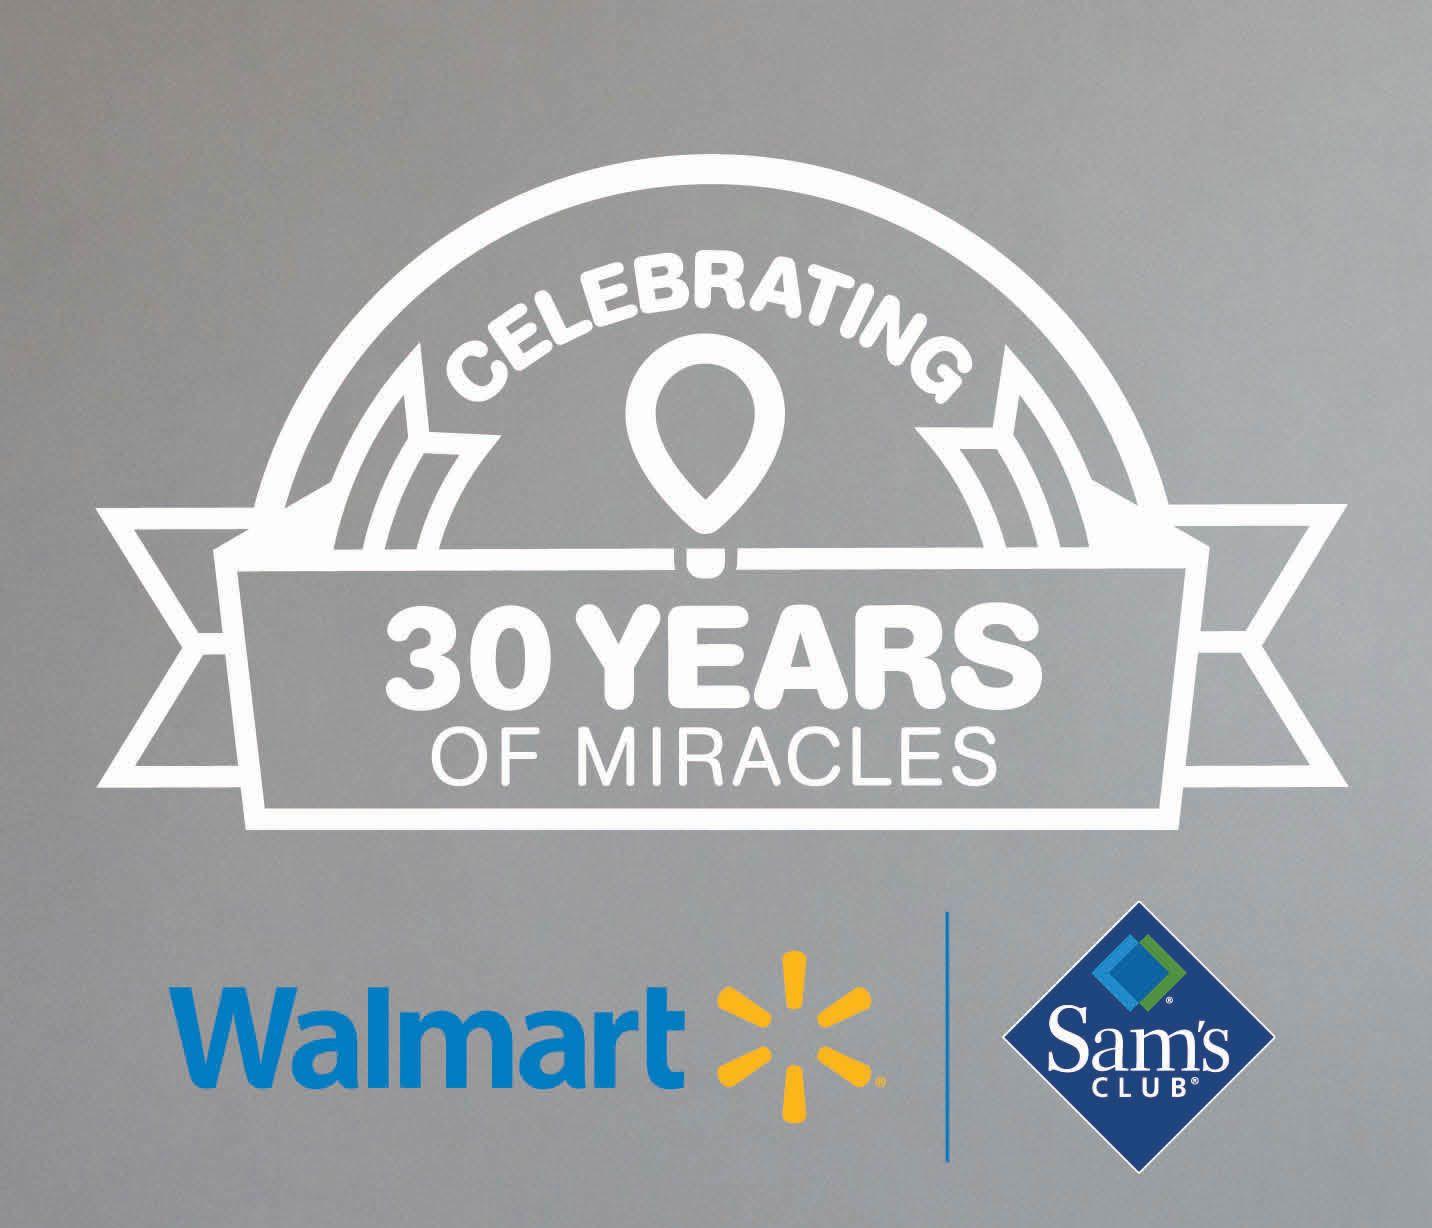 Wallmart Pictures of S Logo - Walmart and Sam's Club Stores Raise Money for Freeman Joplin